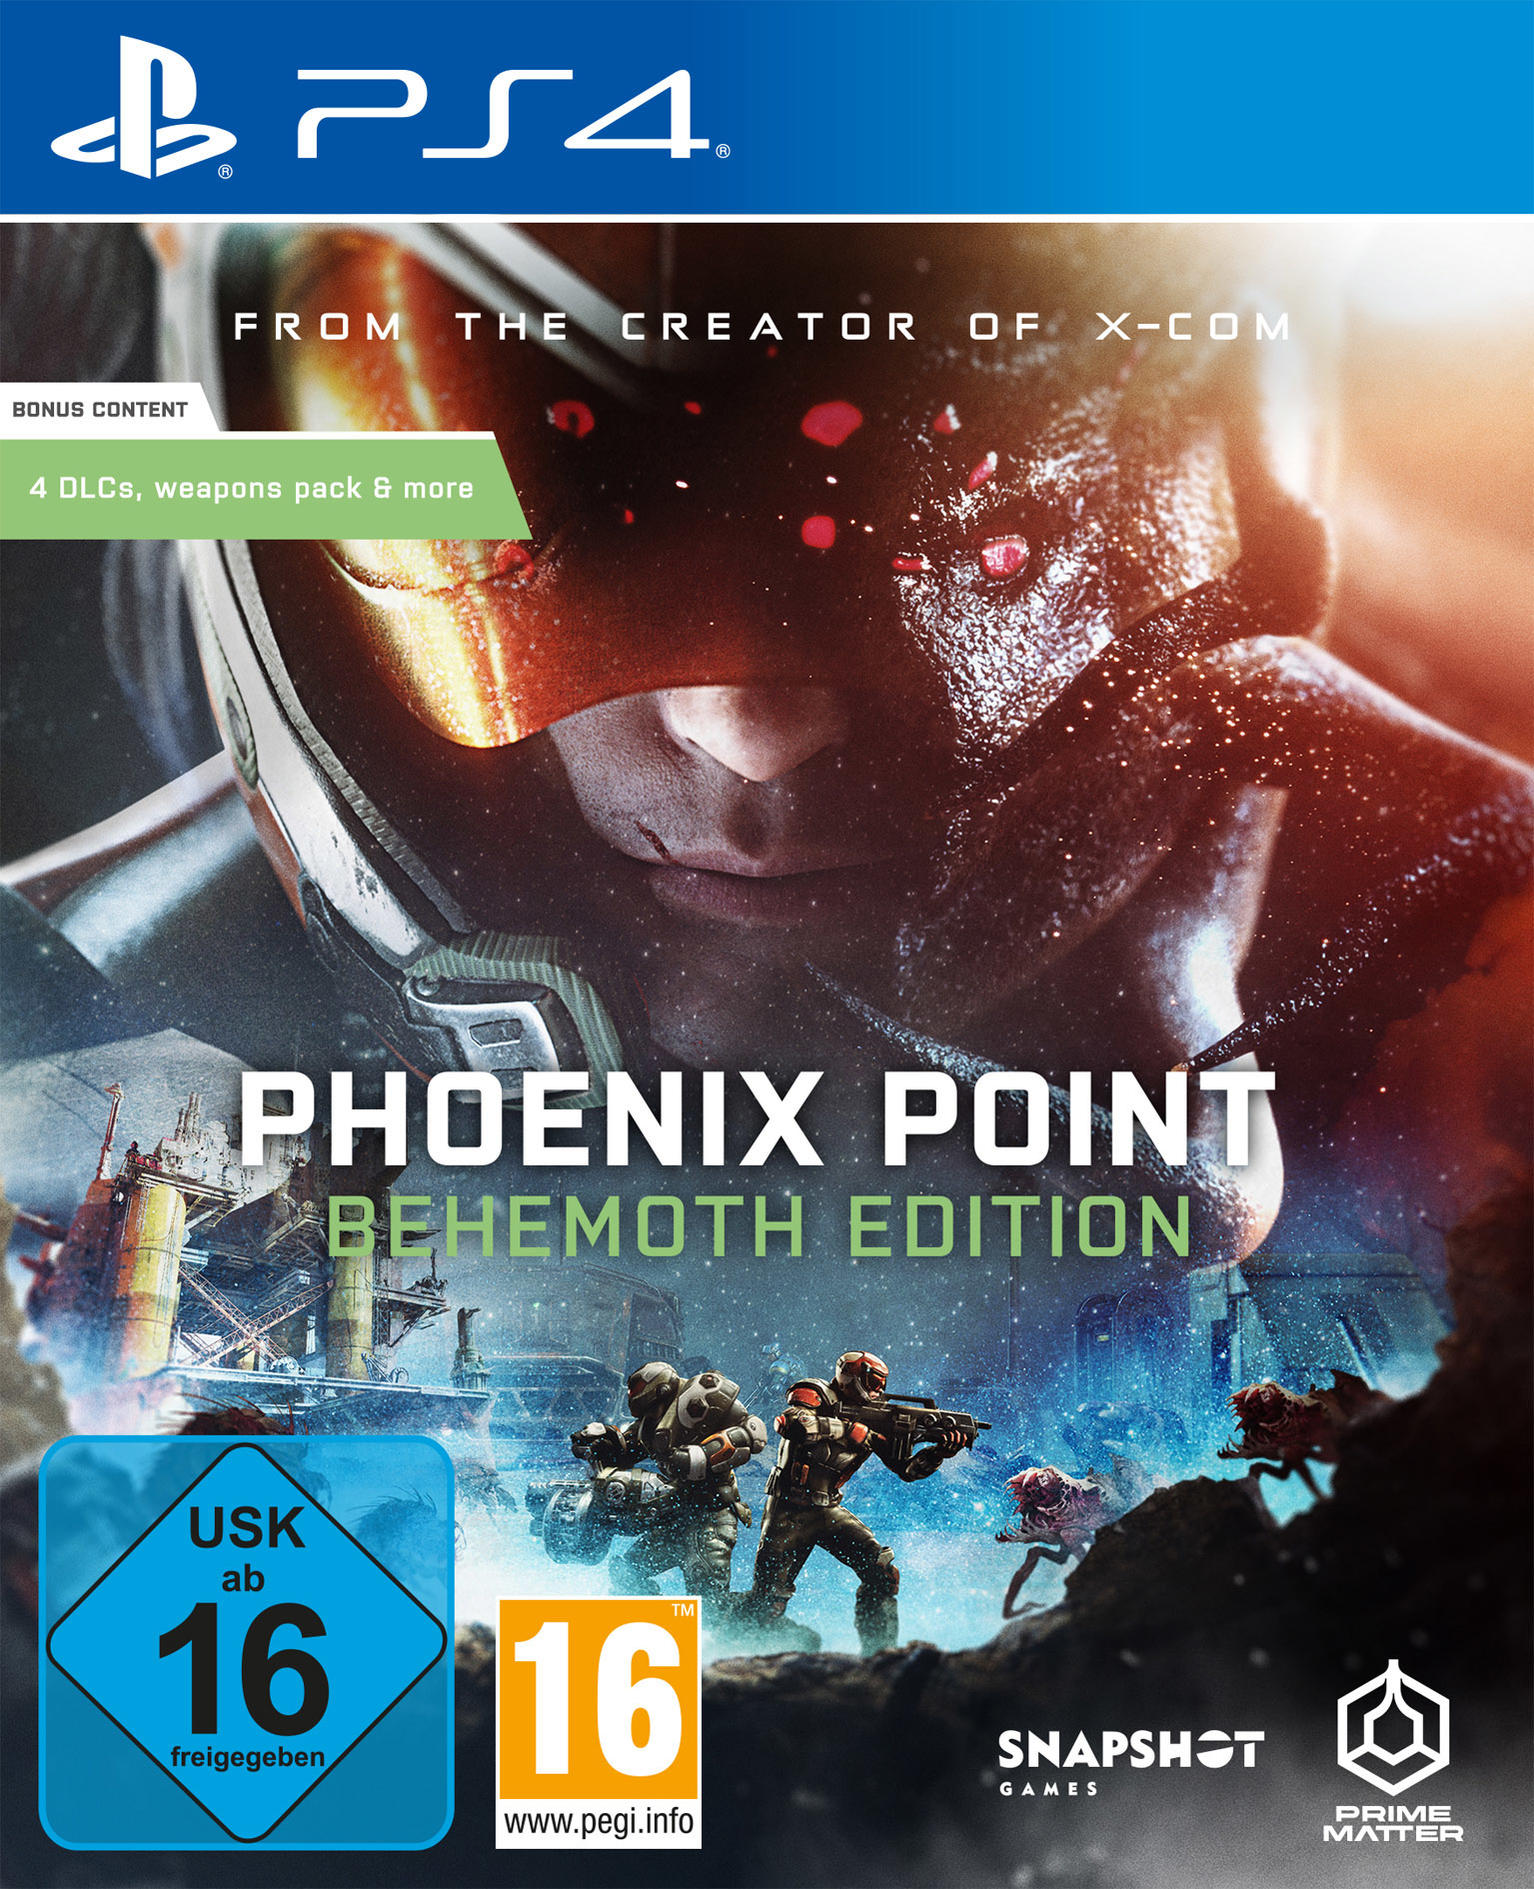 POINT [PlayStation PS4 (BEHEMOTH PHOENIX 4] EDITION) -